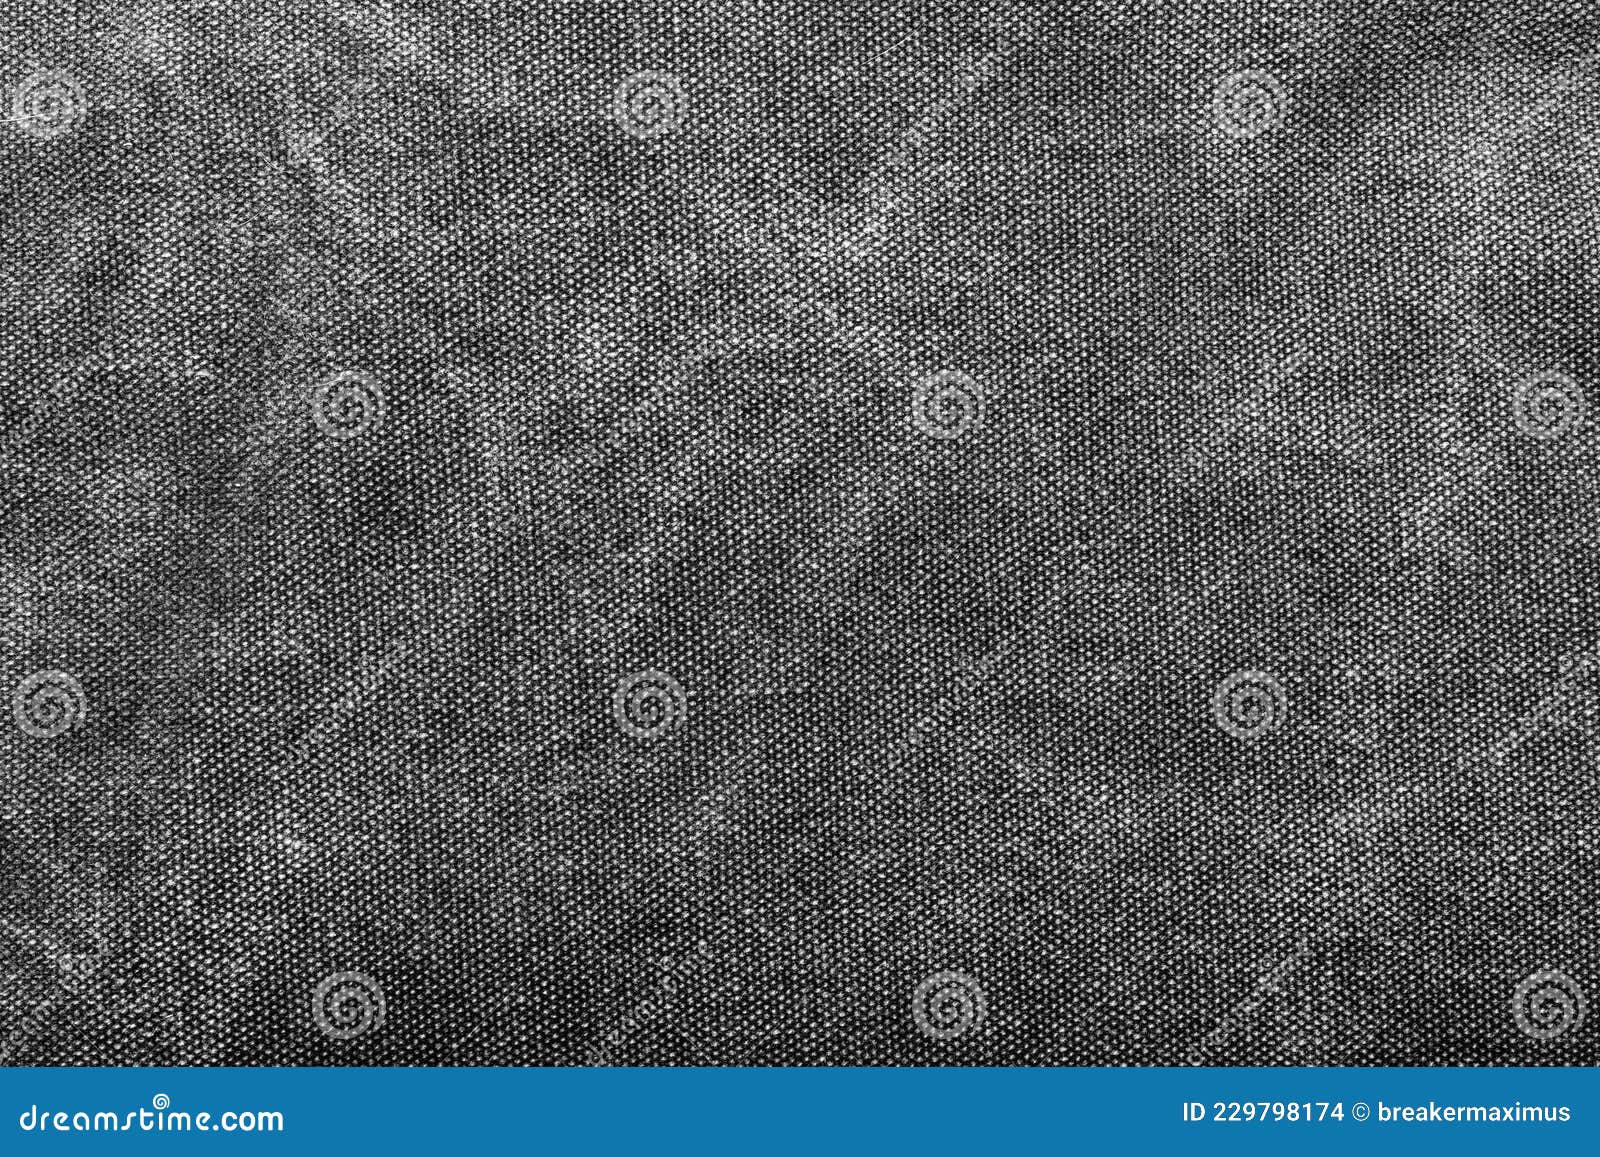 Texture Backdrop Photo of Grey Colored Worn Denim Cloth Stock Photo ...